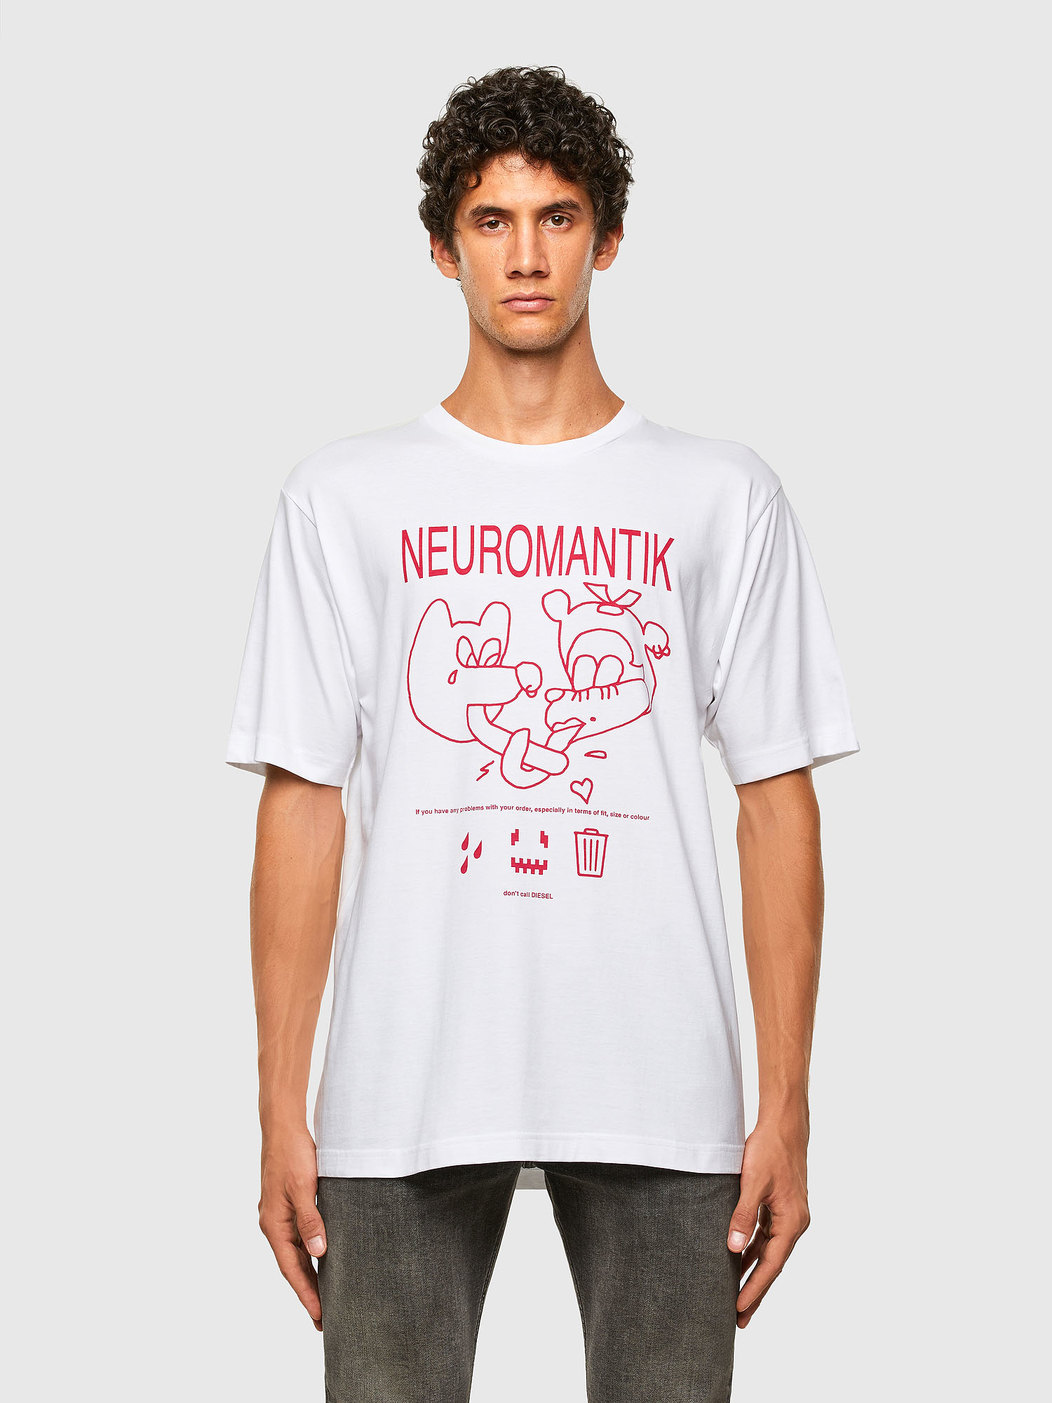 Seamless T-Shirt With Neuromantik Print